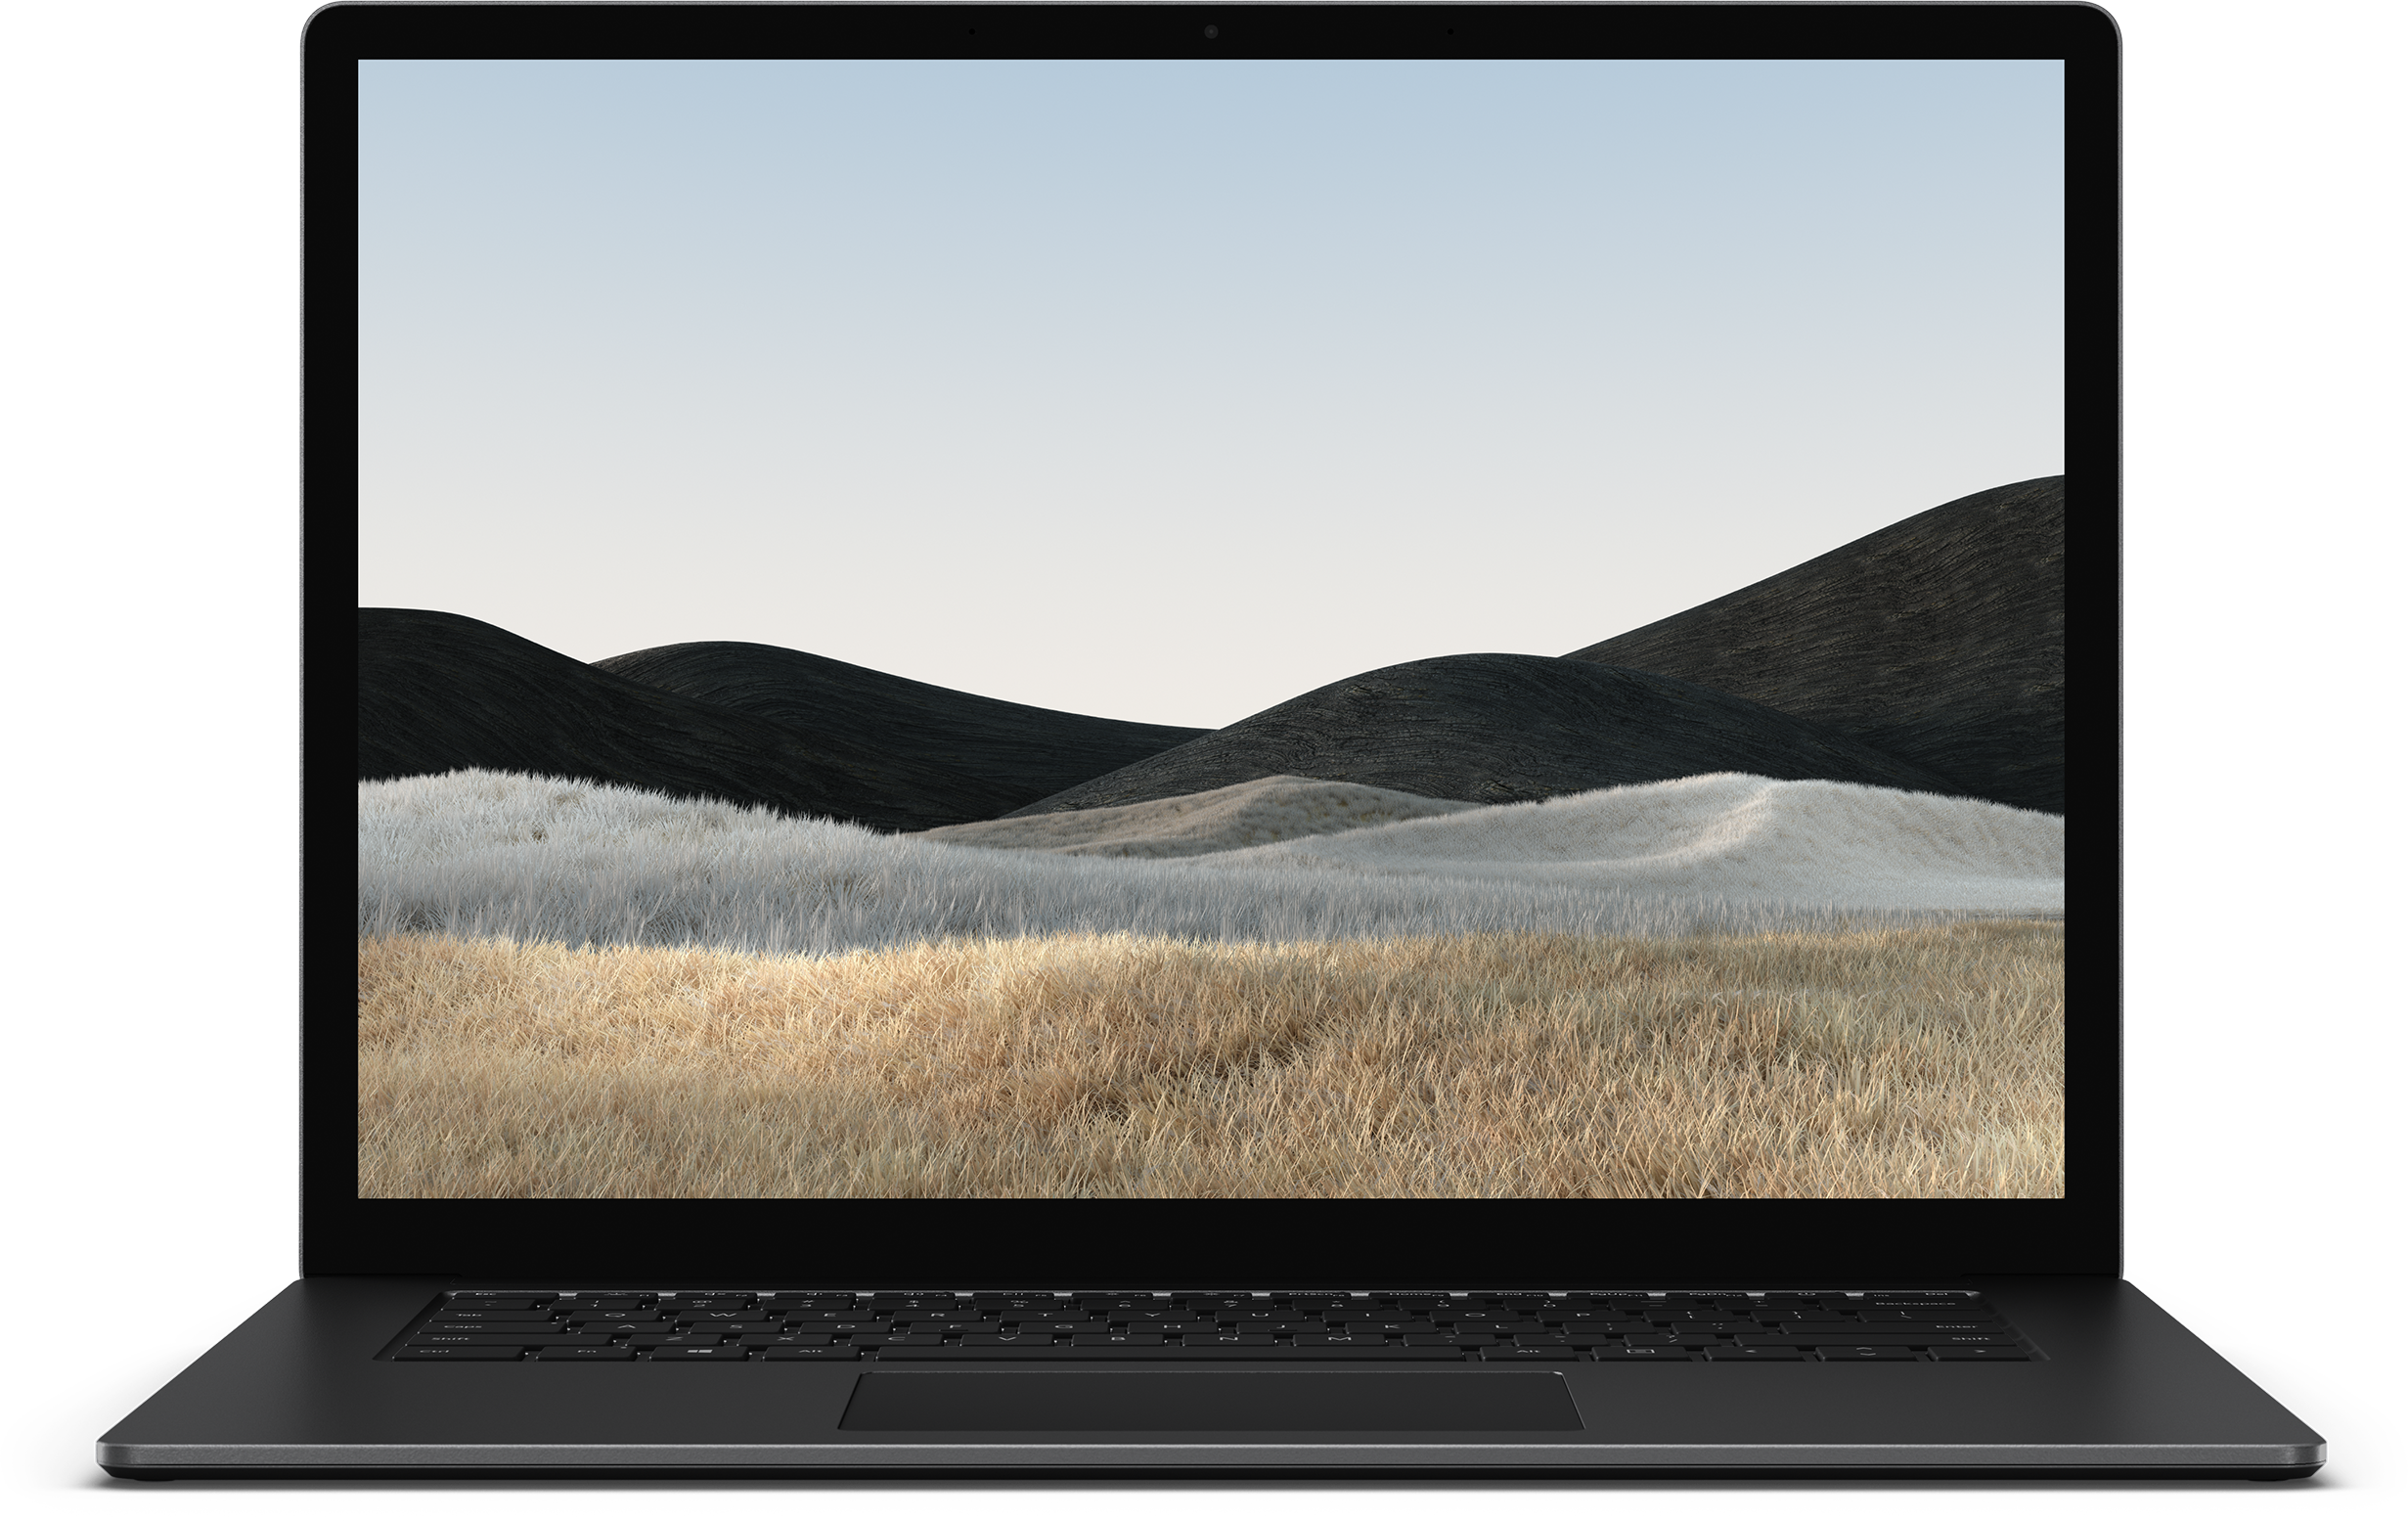 Surface Laptop 4 for Business - 15", Matte Black (Metal), Intel Core i7, 16GB RAM, 512GB SSD (Certified Refurbished)